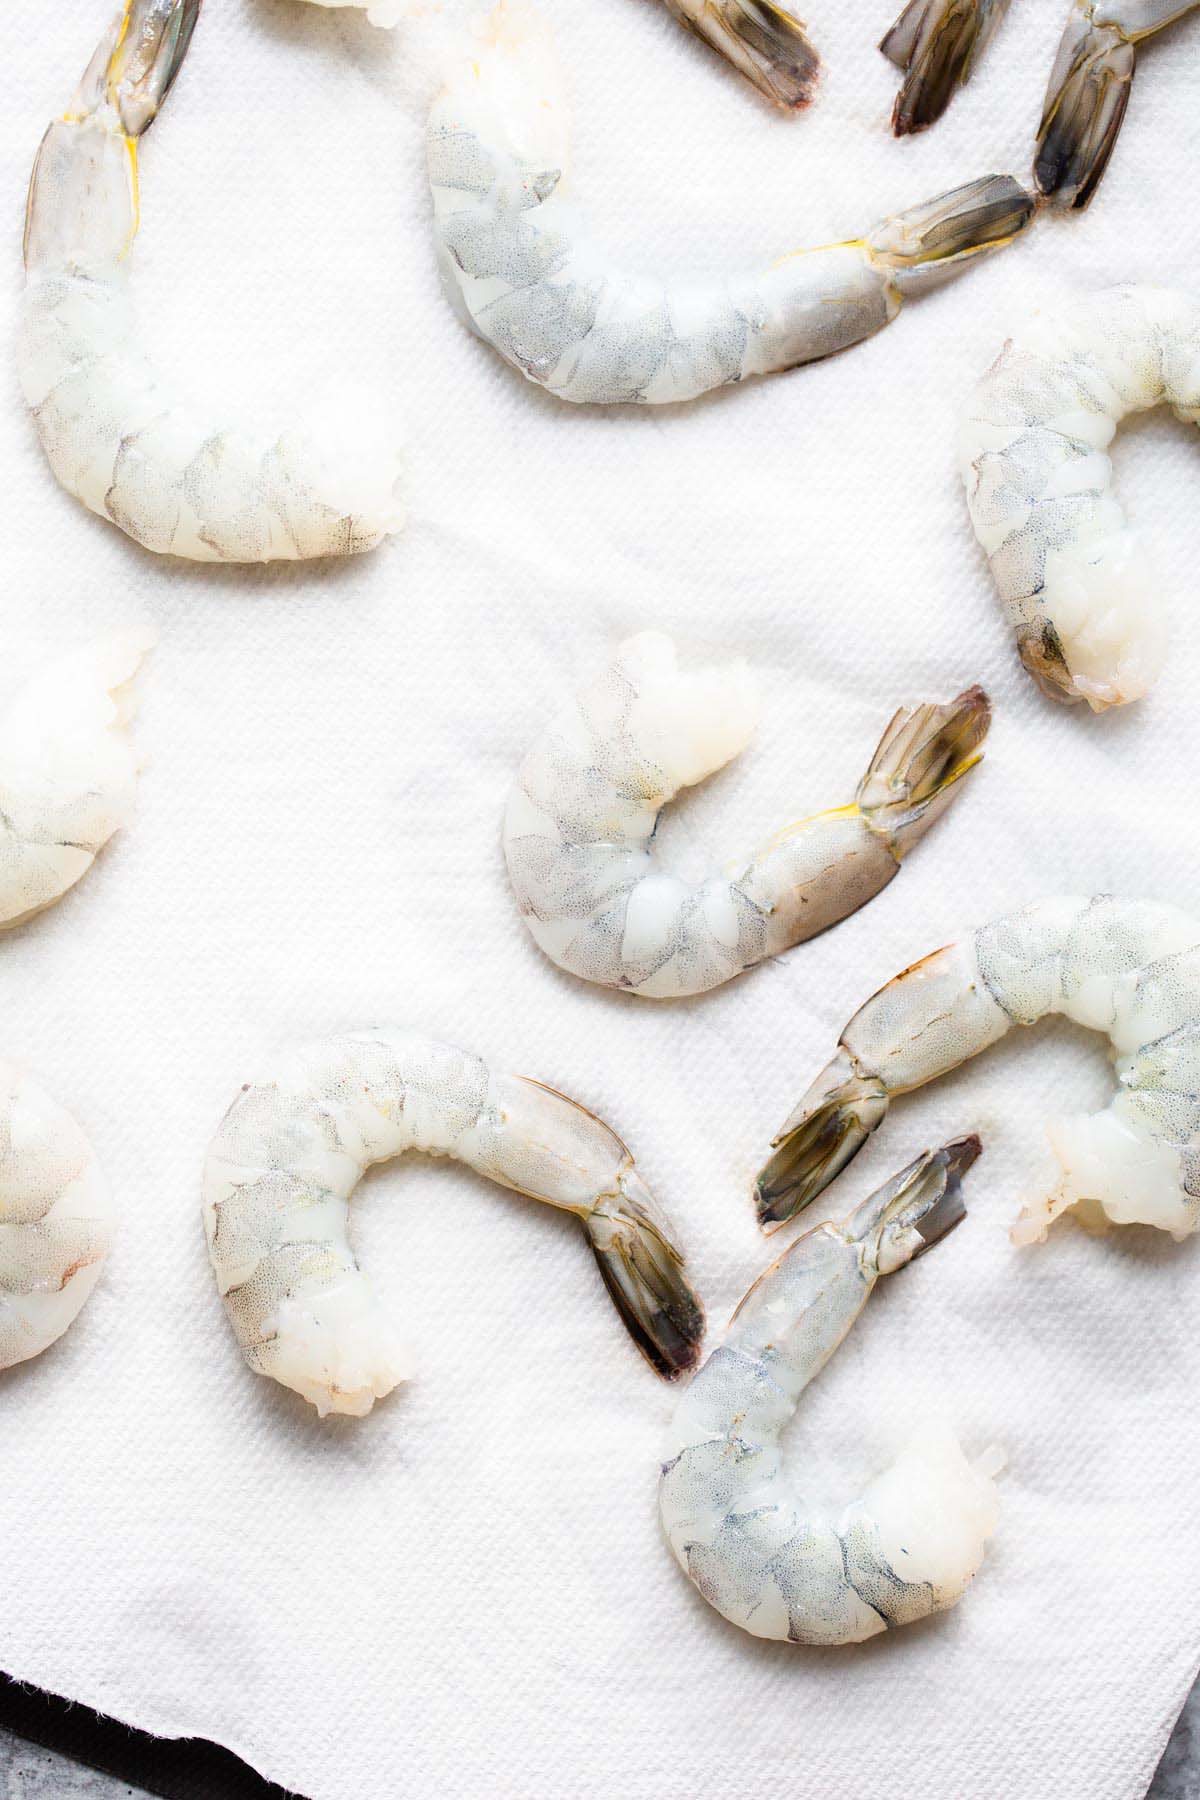 Uncooked shrimp on paper towels.